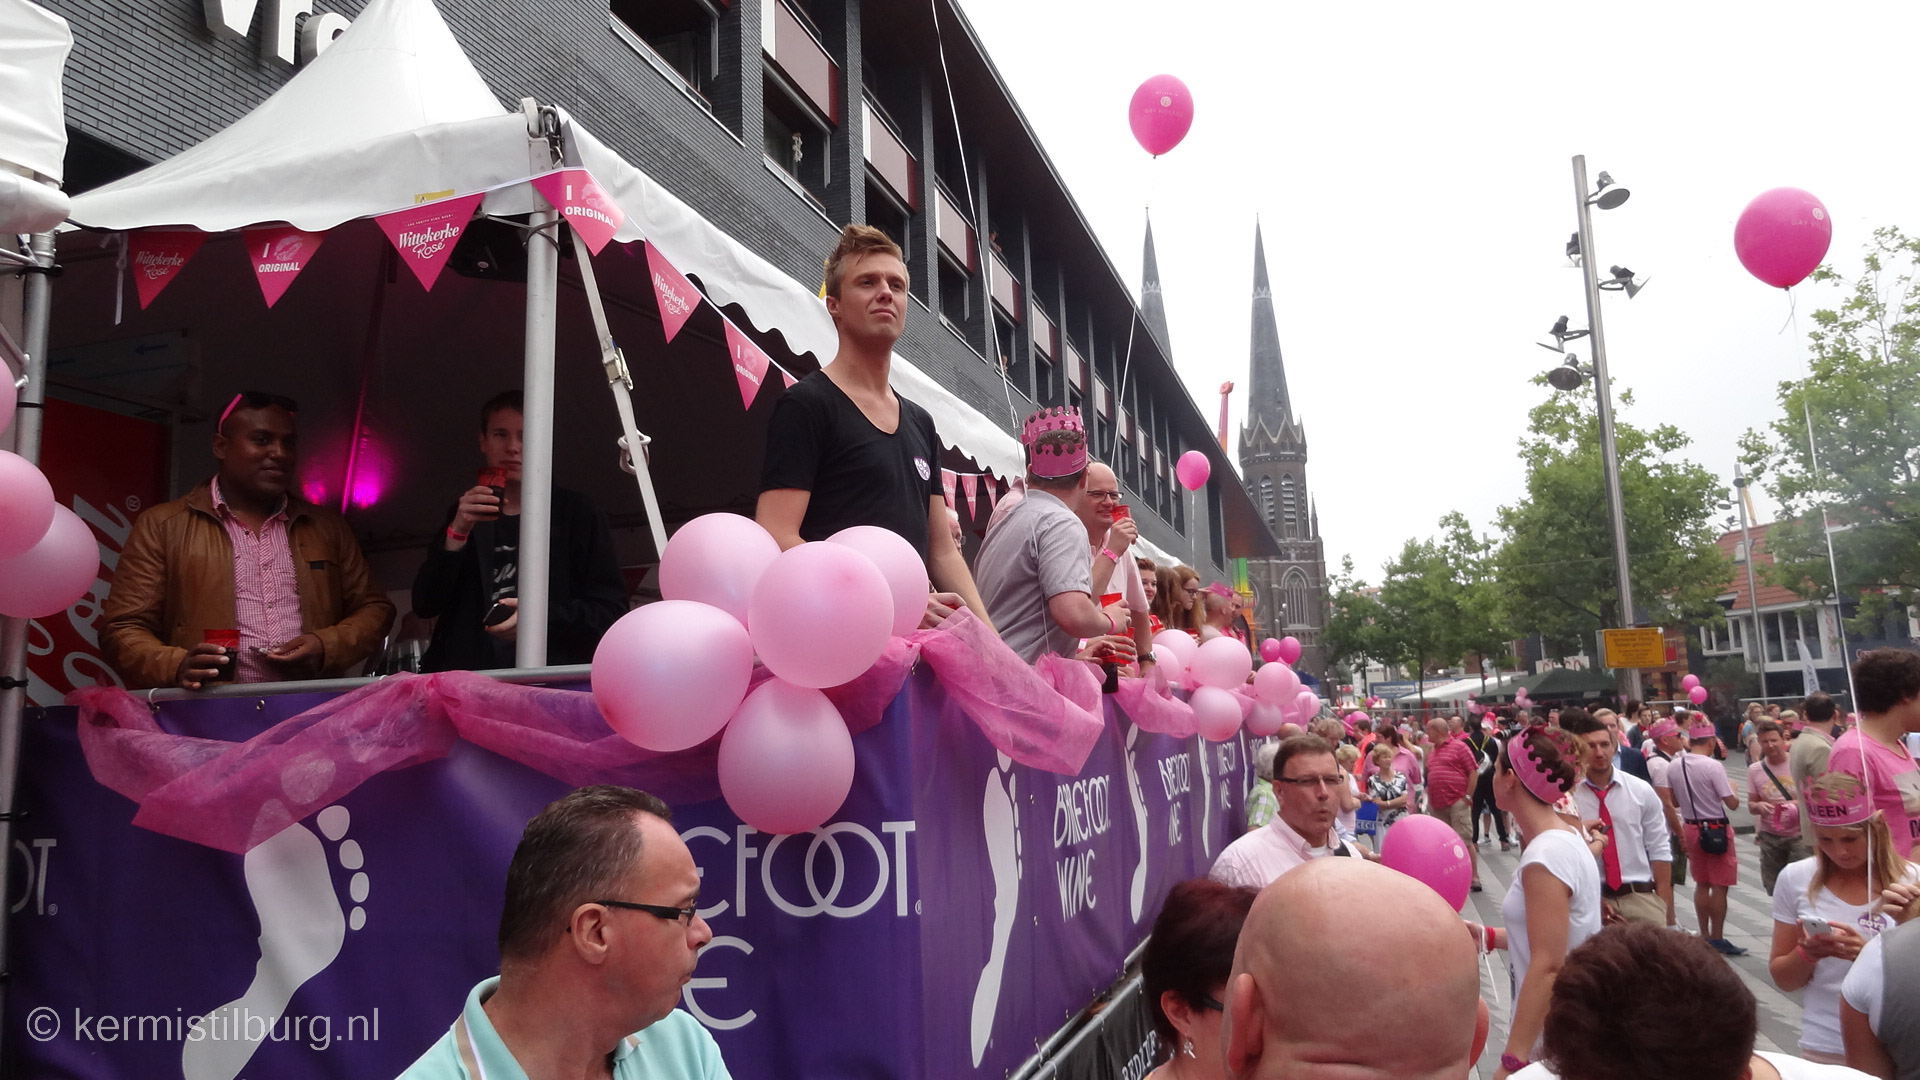 2014, Kermis, Tilburg, Tilburgse kermis, roze, roze maandag